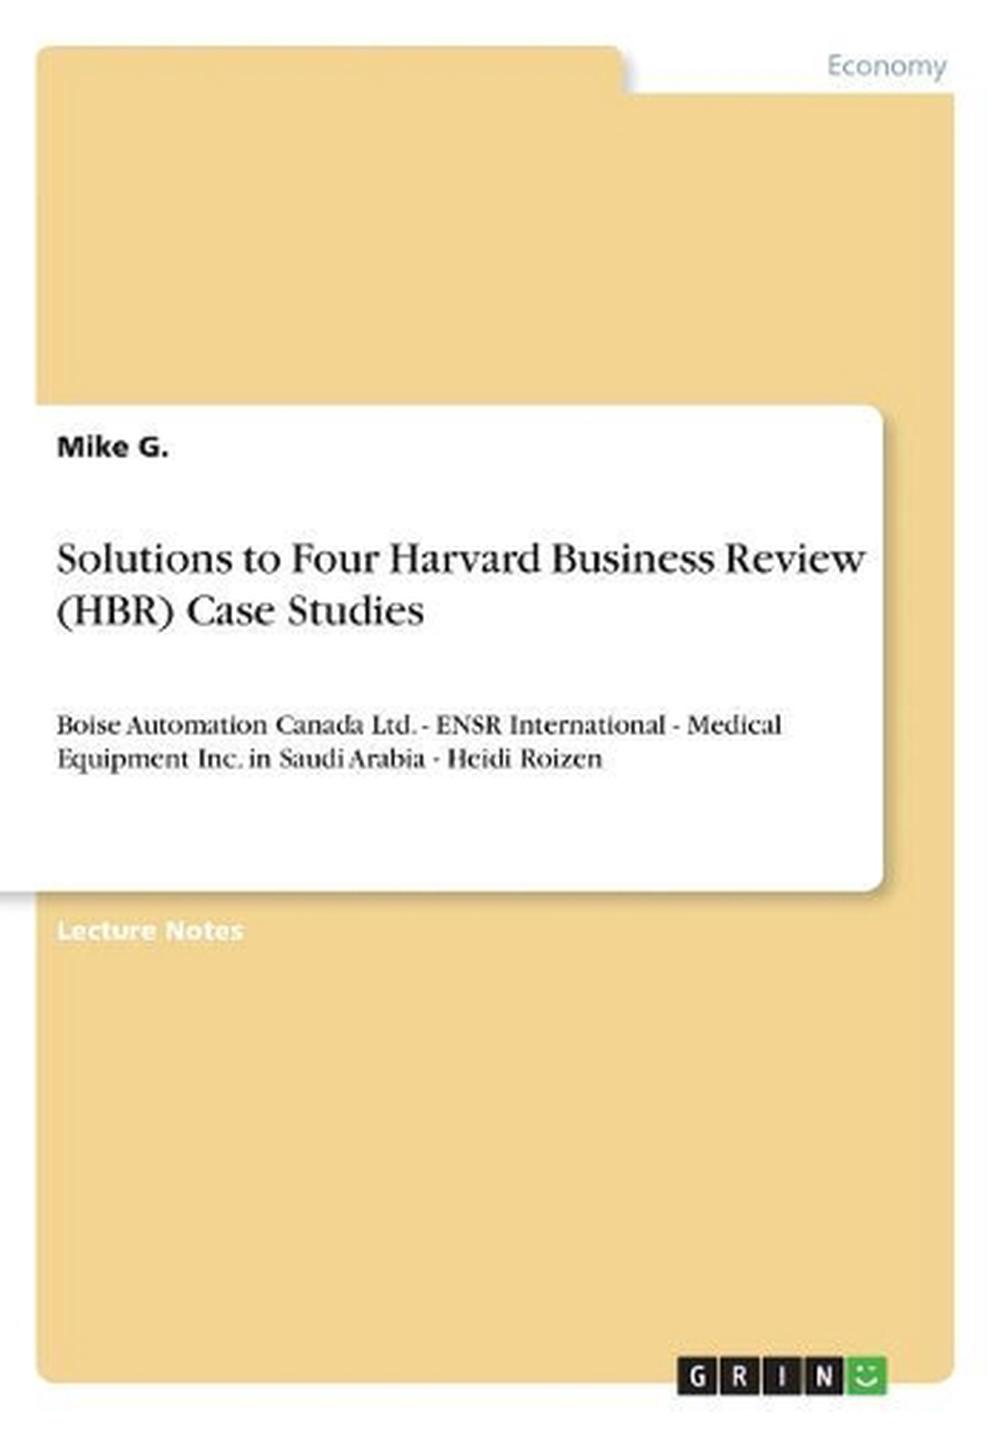 case studies harvard business review